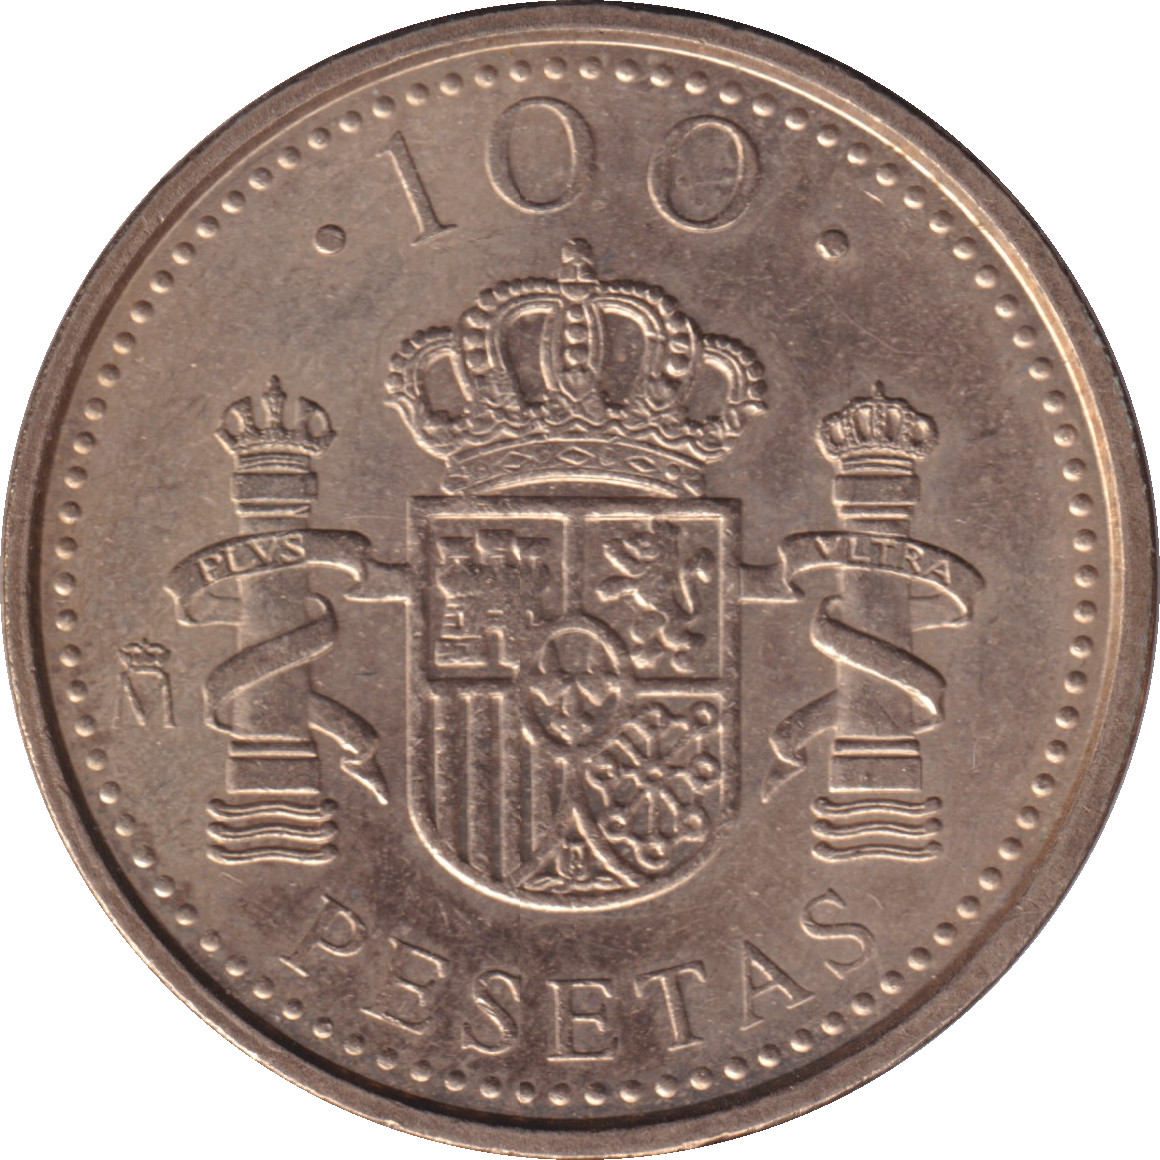 100 pesetas - Juan Carlos I - Old head